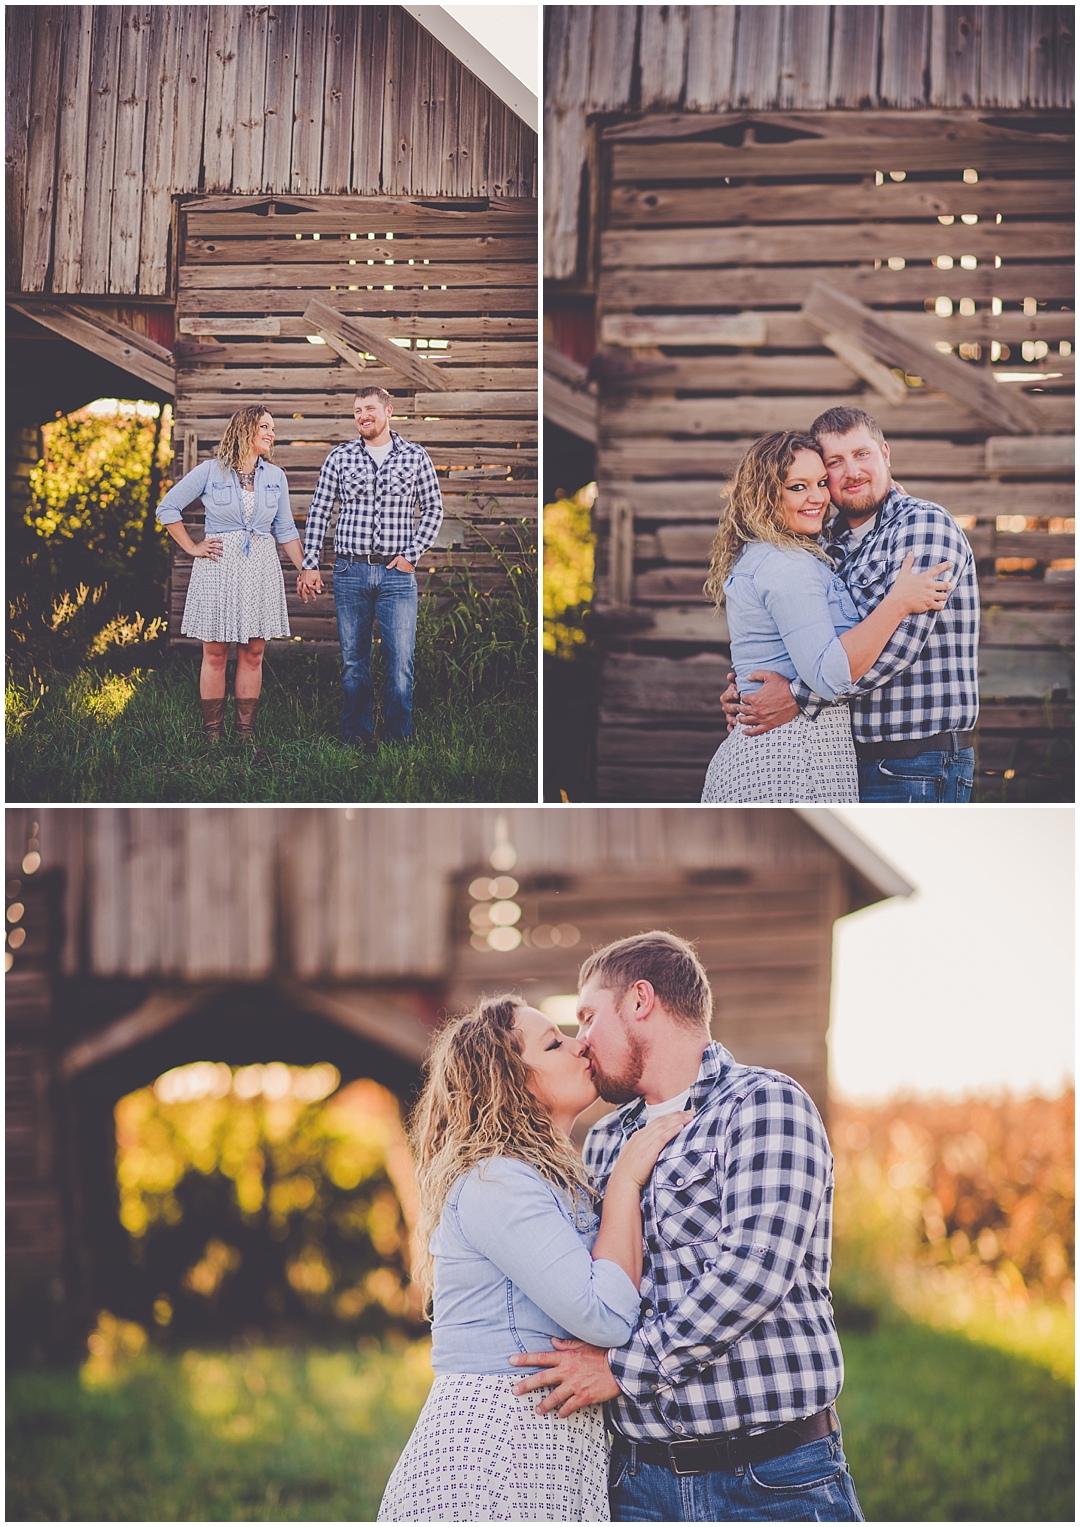 Kara Evans Photographer - Central Illinois Wedding Photographer - Chicagoland Wedding Photographer - Farm Engagement Photos - Harvest Engagement Photos